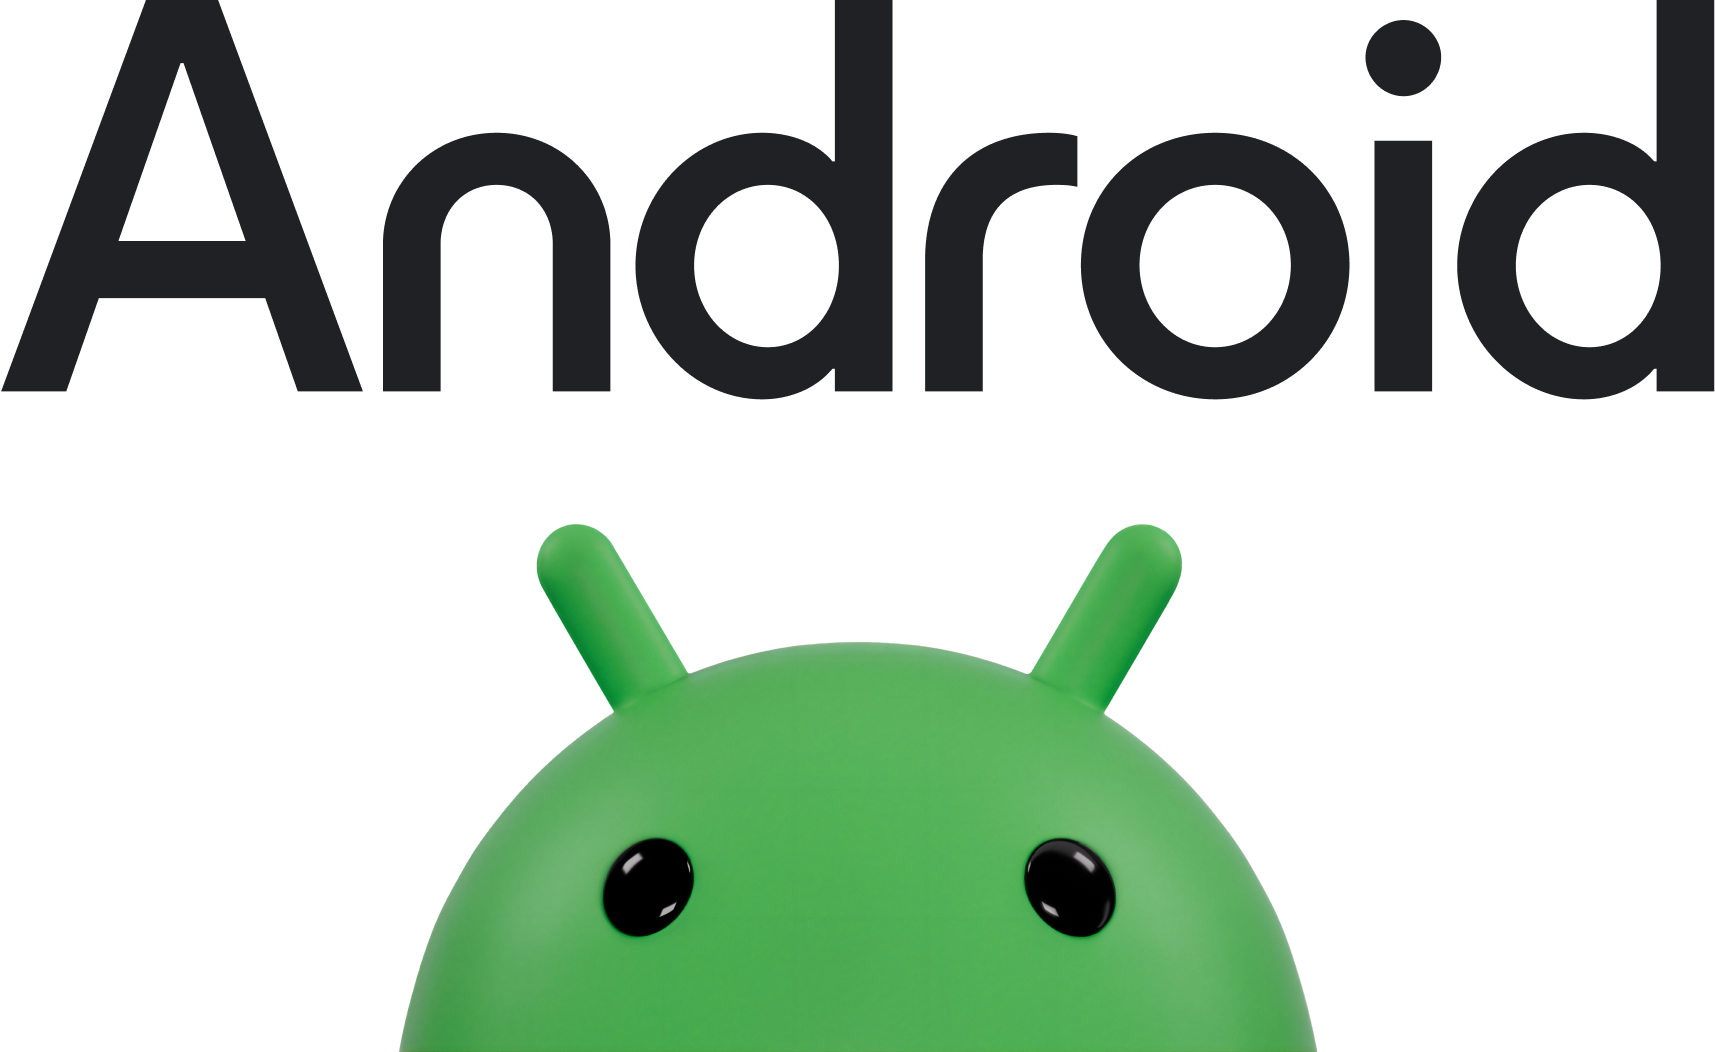 Android 设备 arm 架构和 x86 架构的区别 —— 安装应用时应该如何选择？